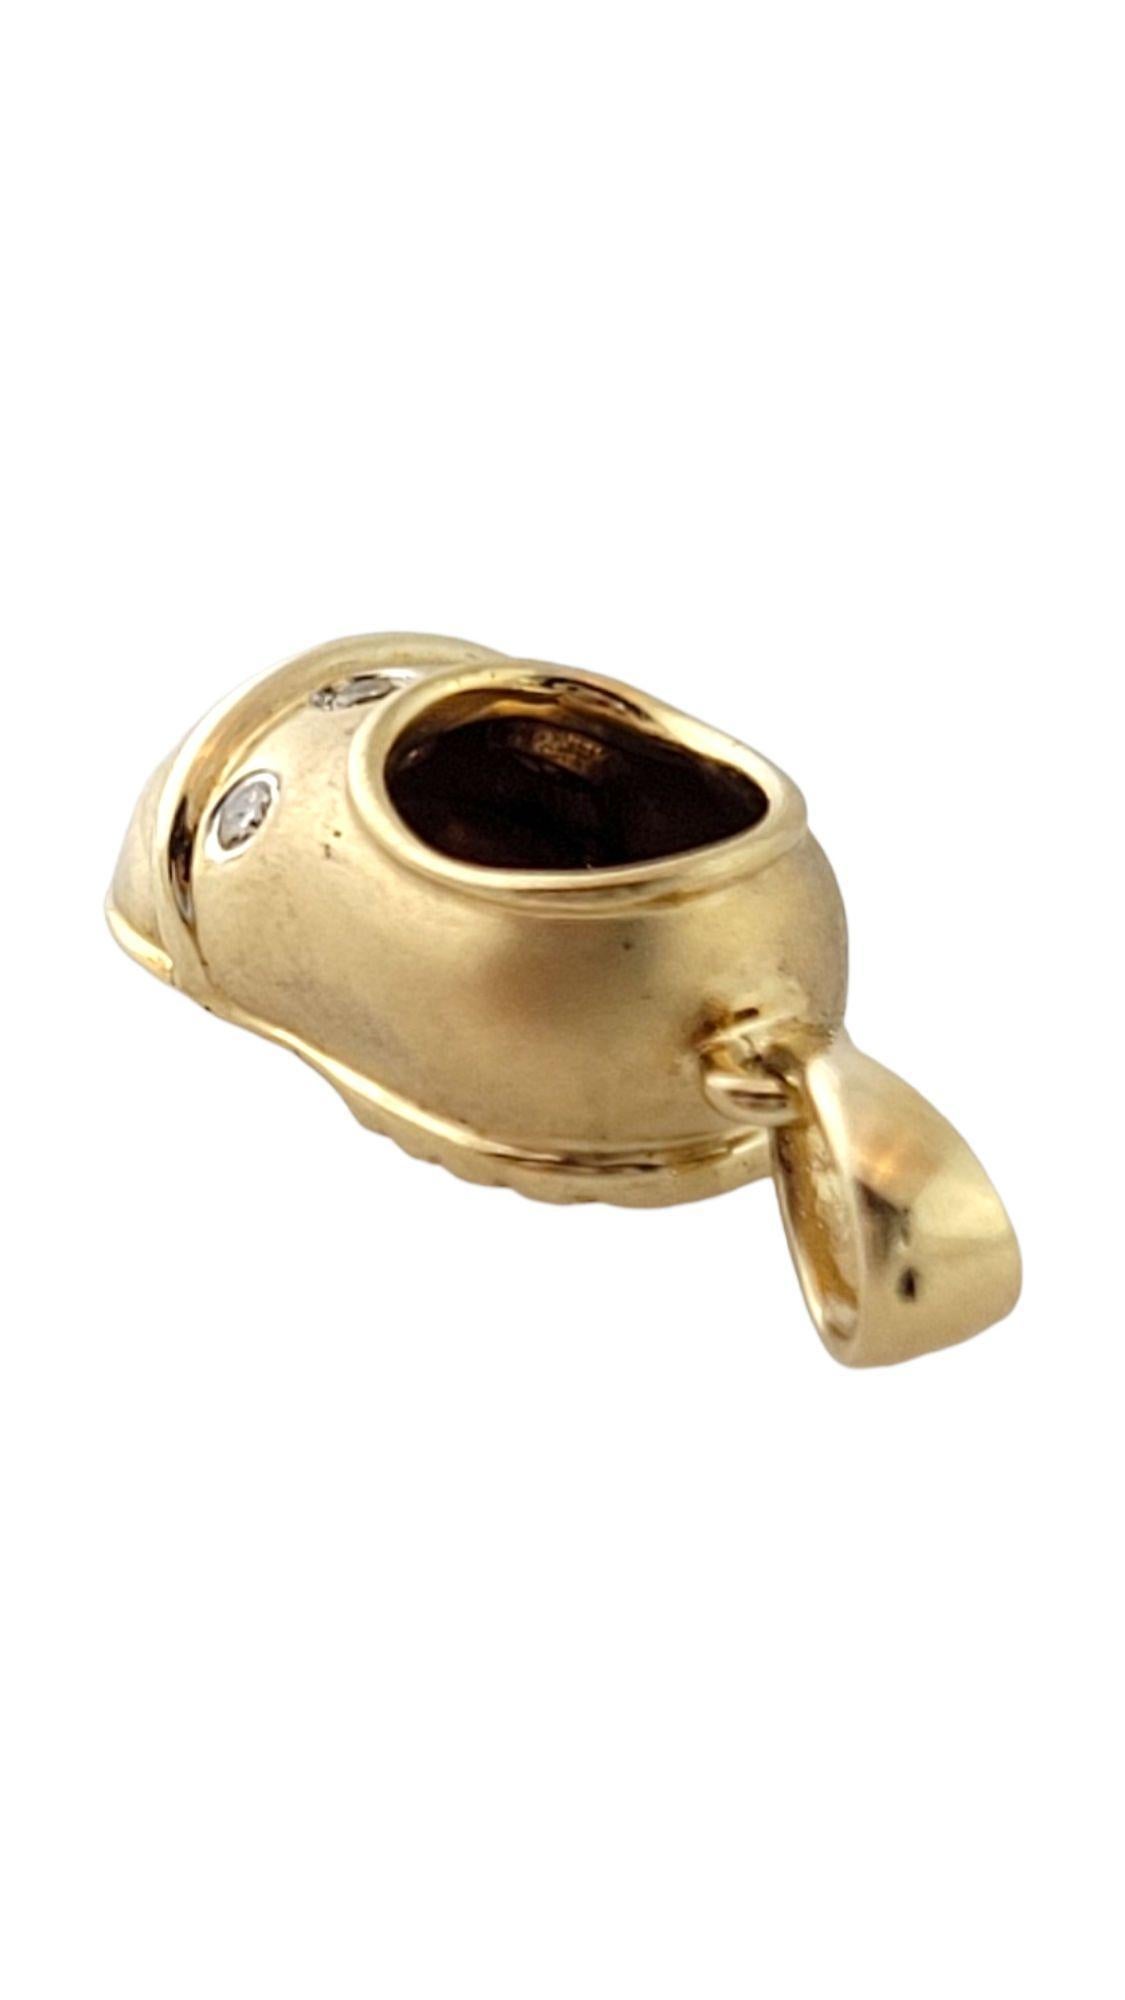 Brilliant Cut 14K Yellow Gold Diamond Baby Shoe Charm #14996 For Sale